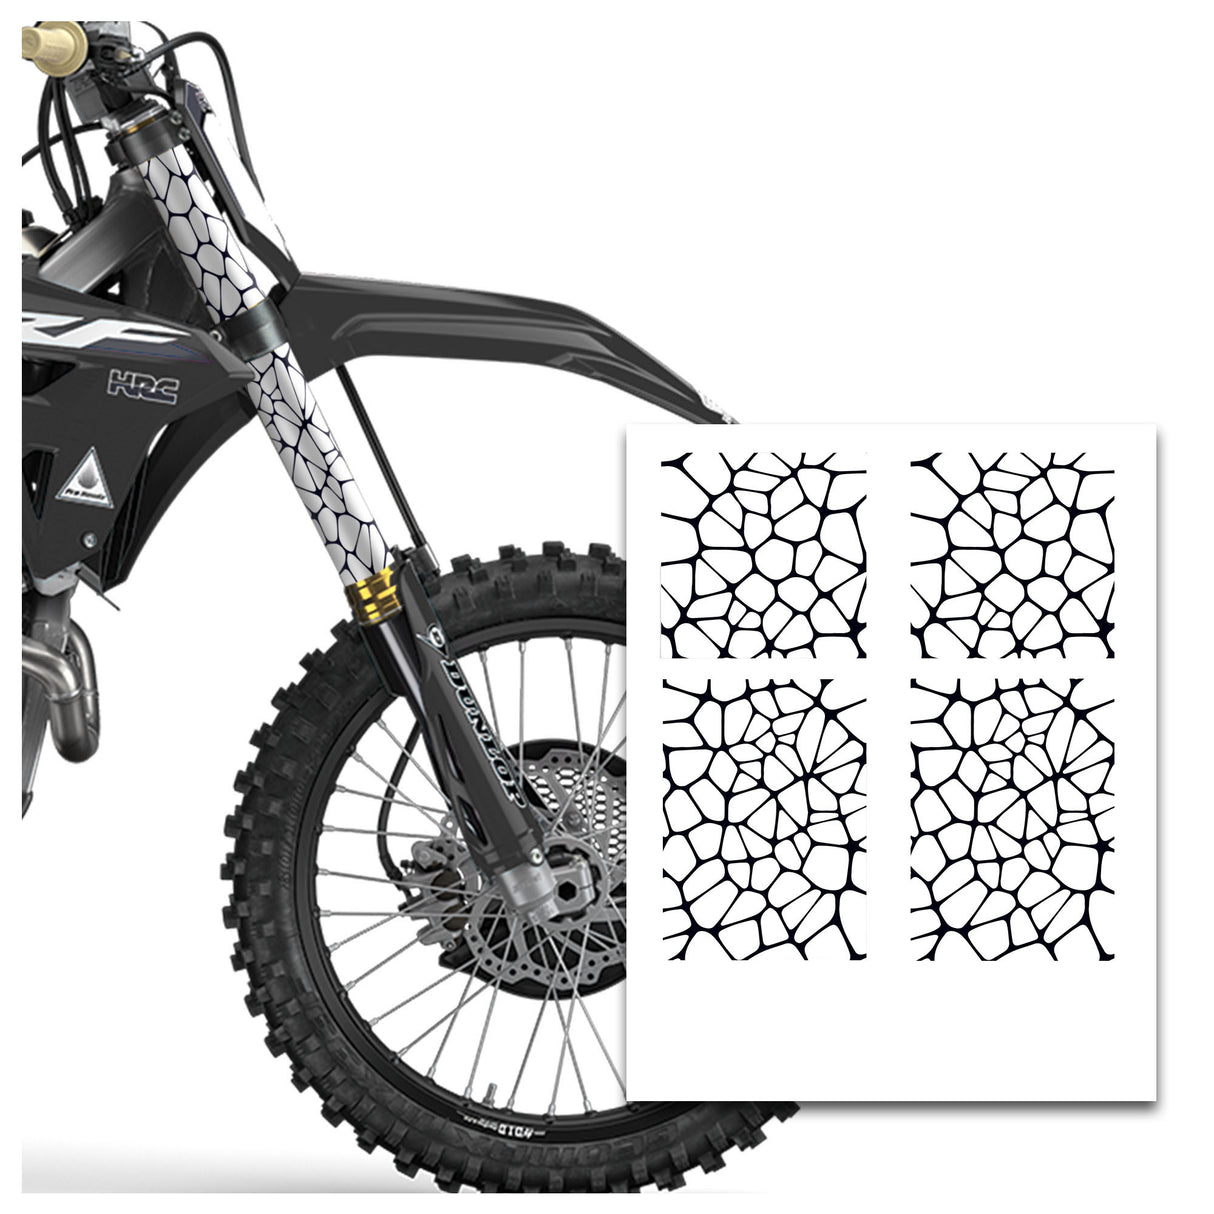 MX Drit Bike Front Fork Wrap Sticker Protection For Honda Yamaha Kawaski Suzuki [TT07 Split] - StickerBao Wheel Sticker Store